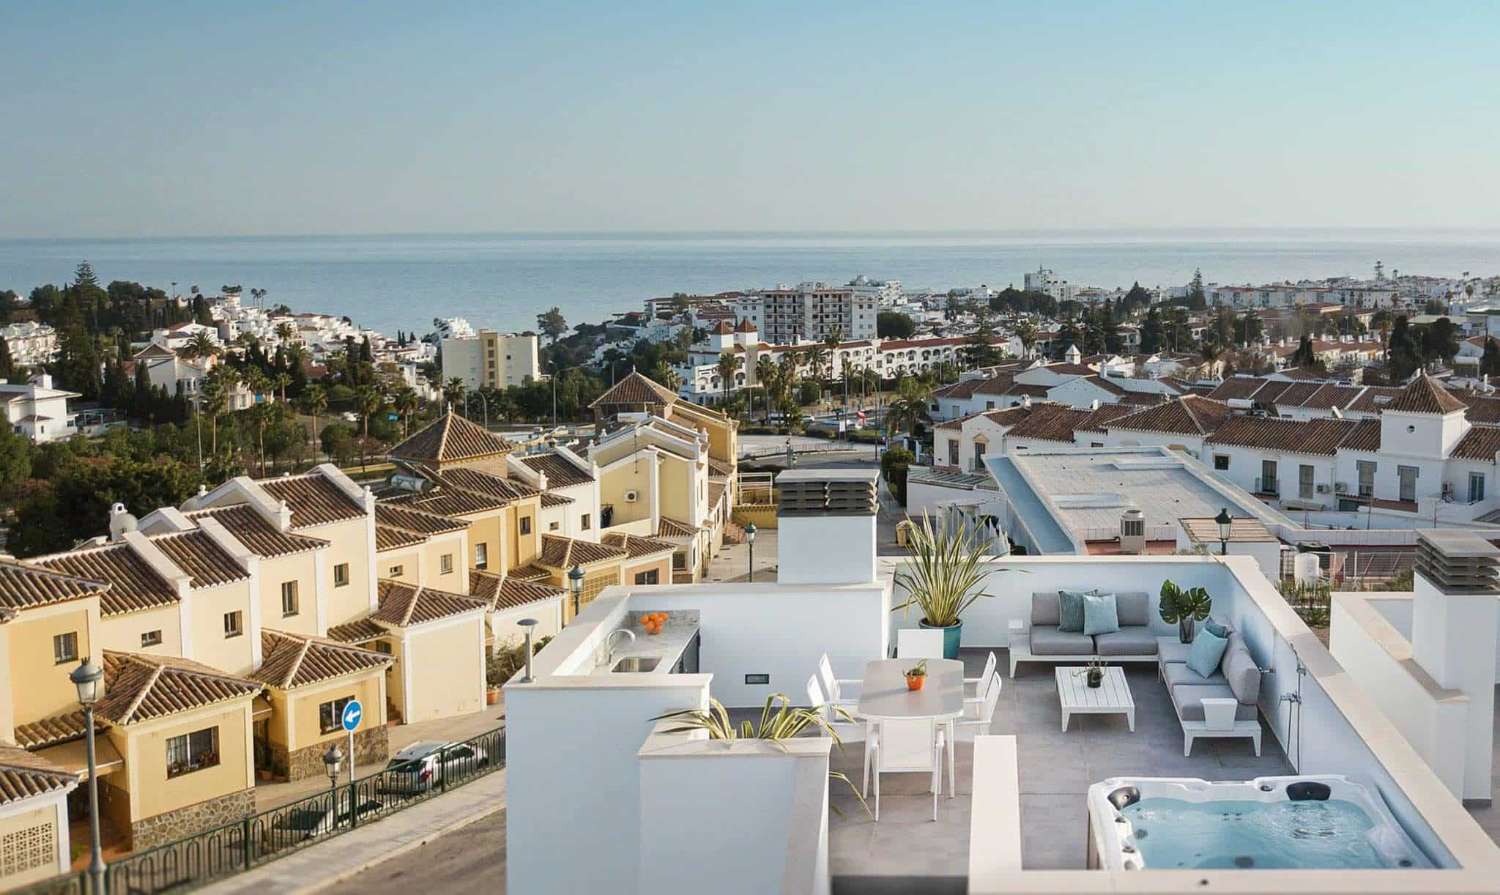 Luxury townhouses with seaviews!